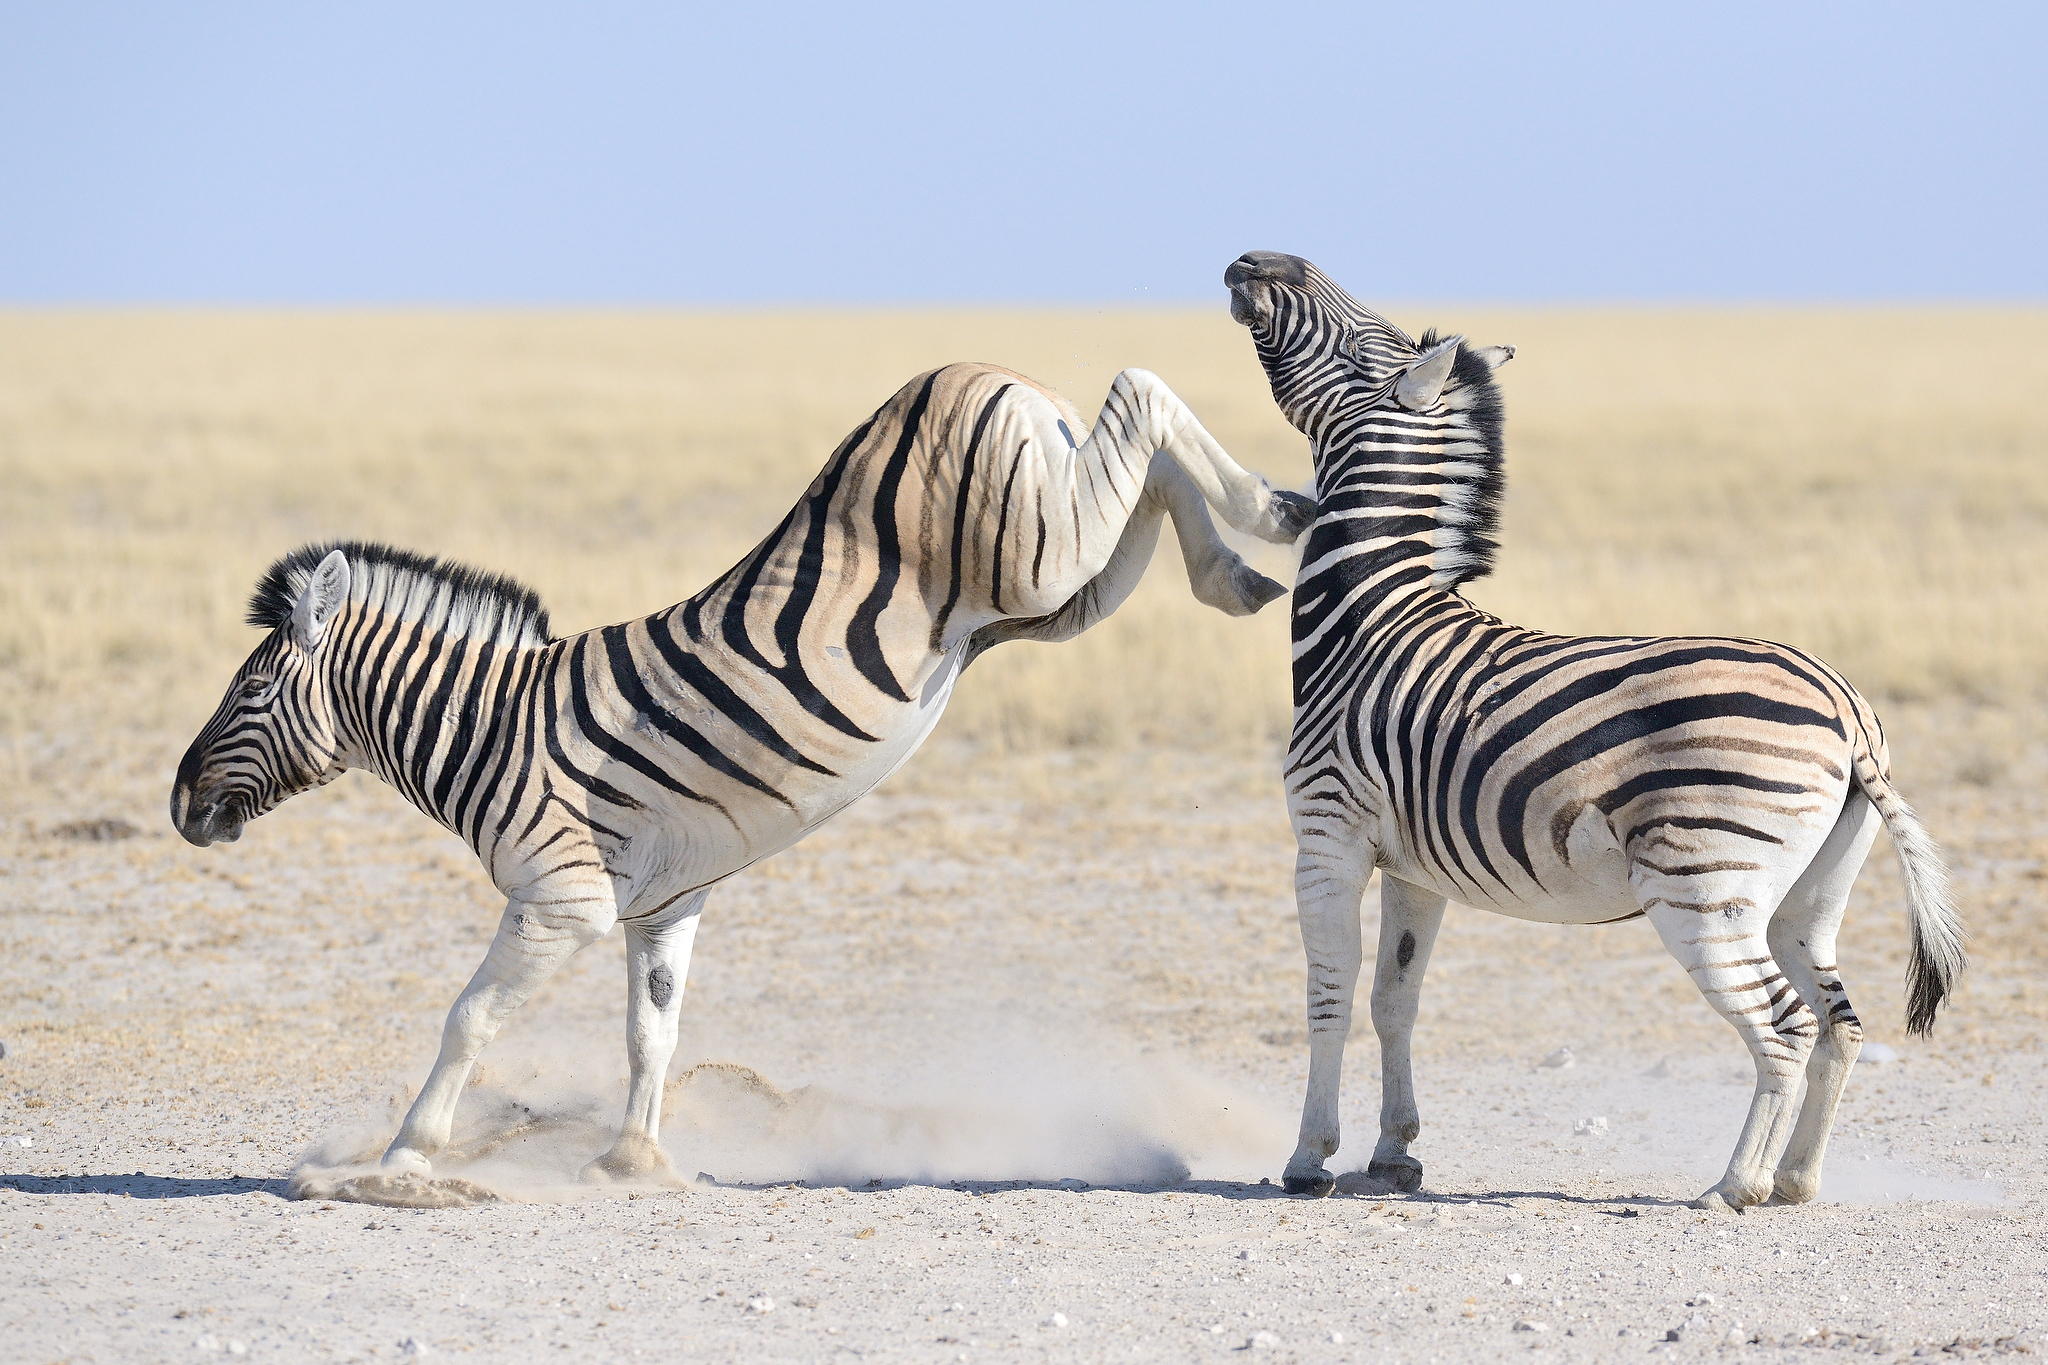 500px Blog » The passionate photographer community. » Zebra Fights ...